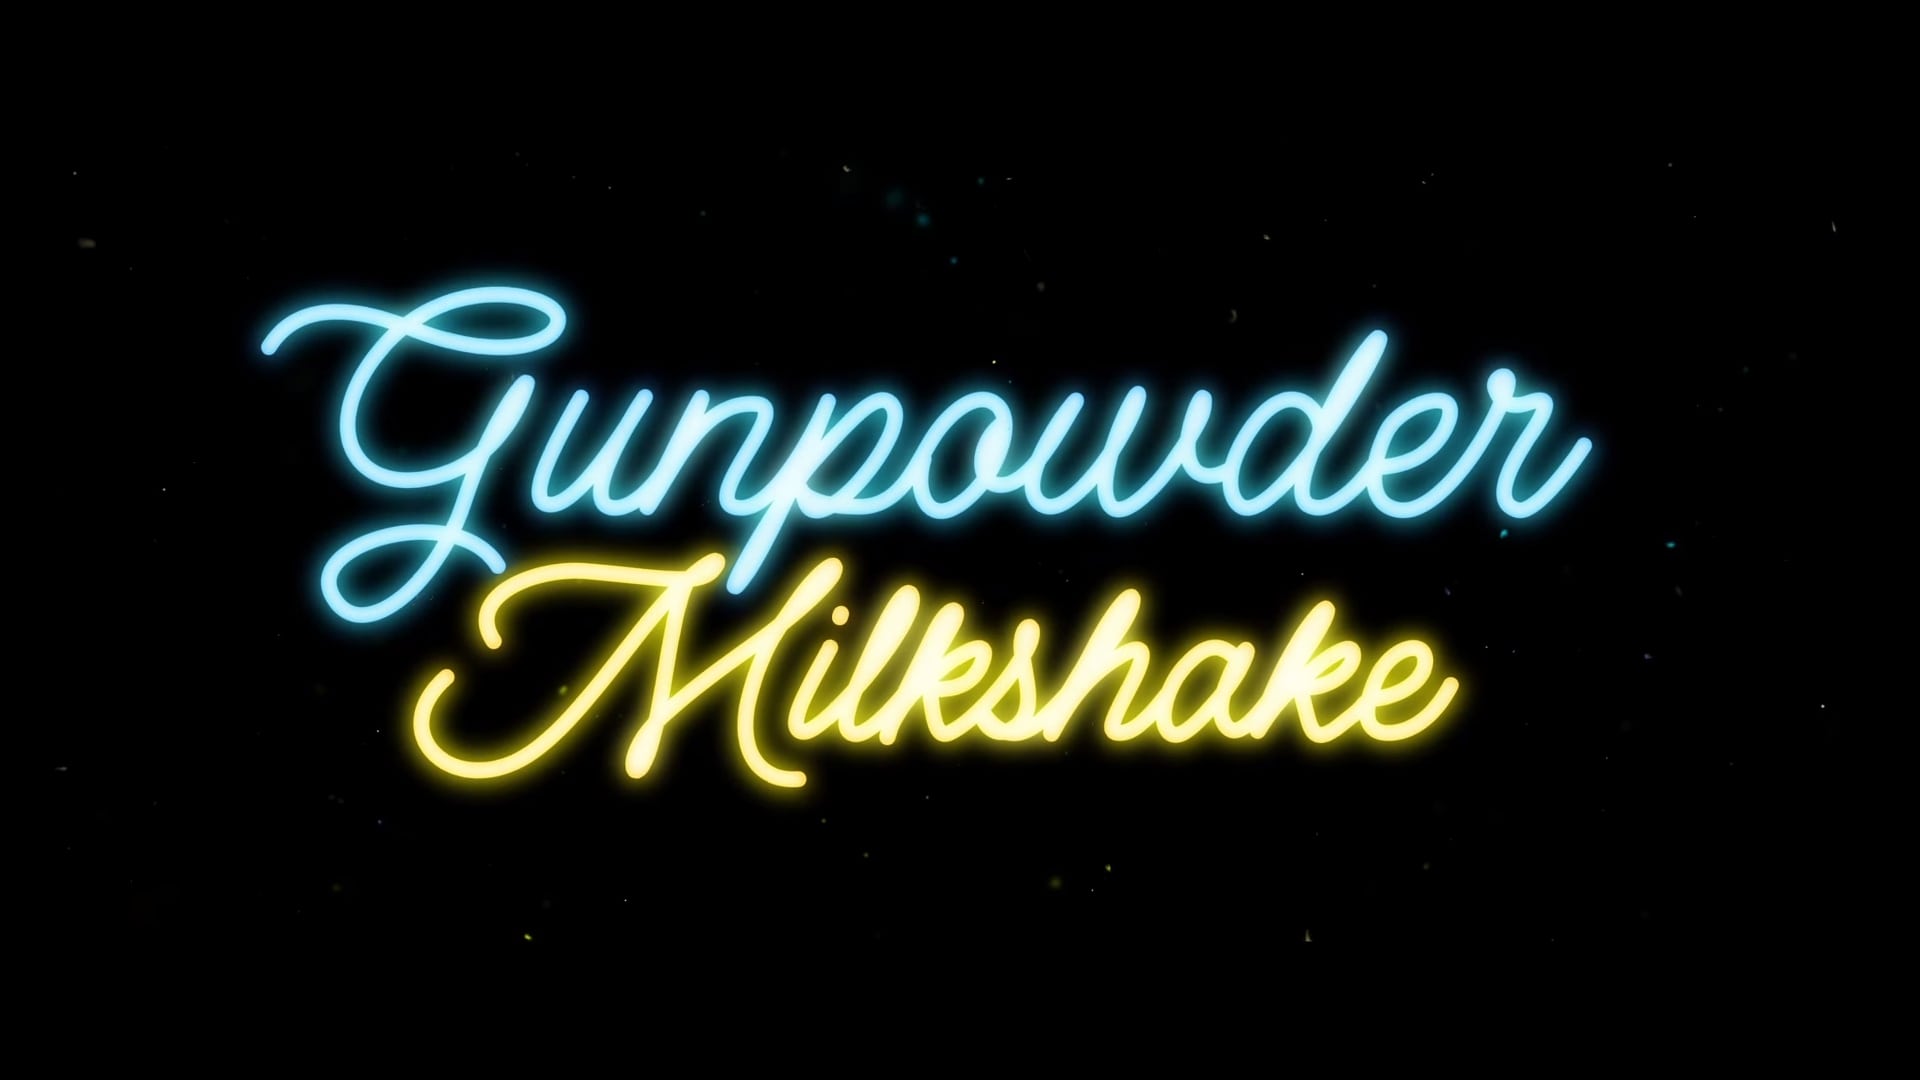 Netflix Gunpowder Milkshake Trailer, Coming to Netflix in July 2021